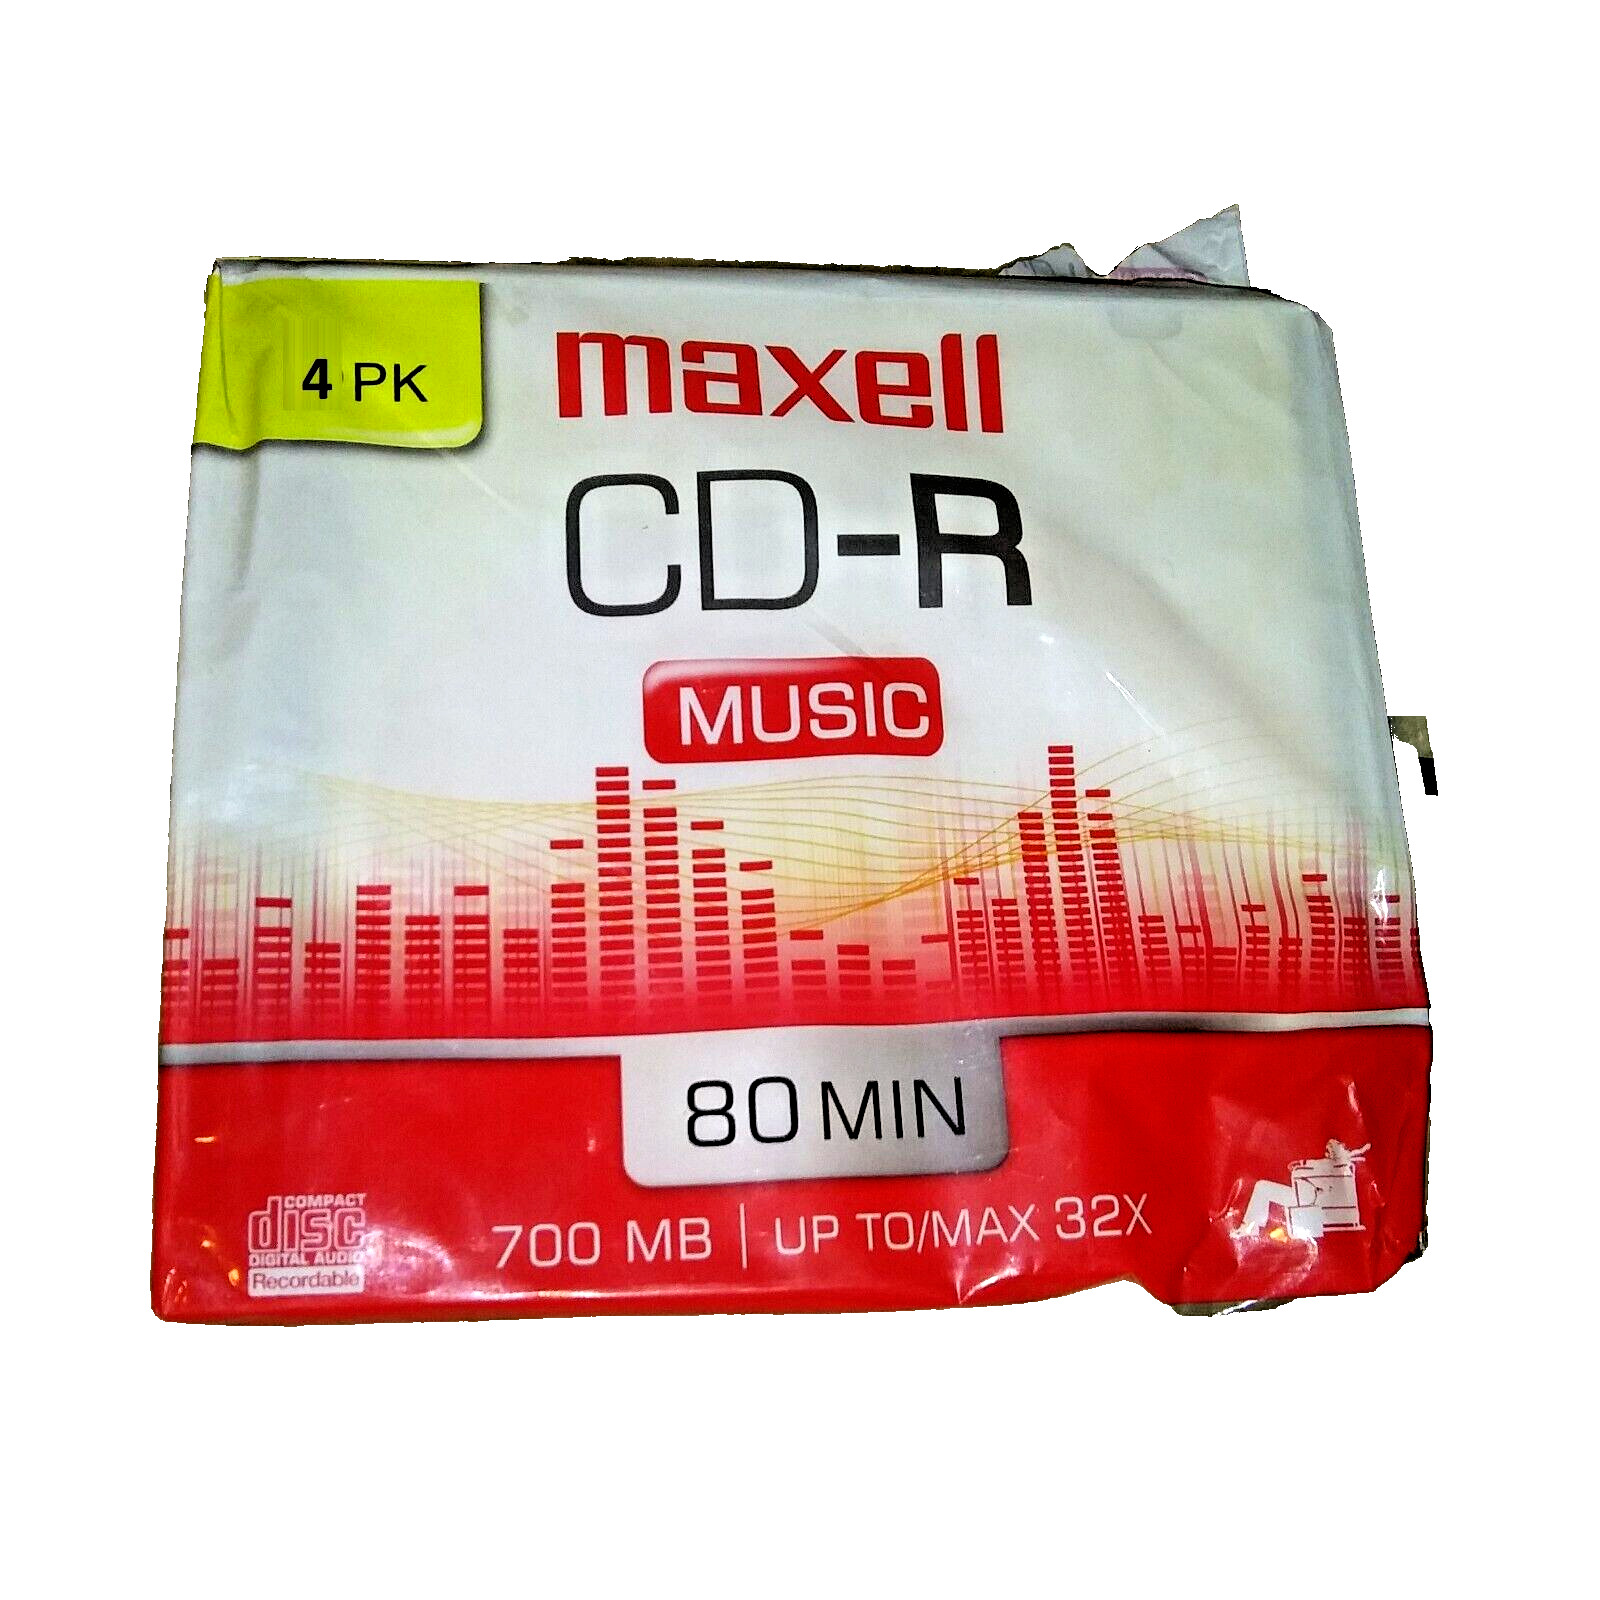 Maxell CD-R 4 pk Digital Audio Compact Discs 80 min / 700 MB 